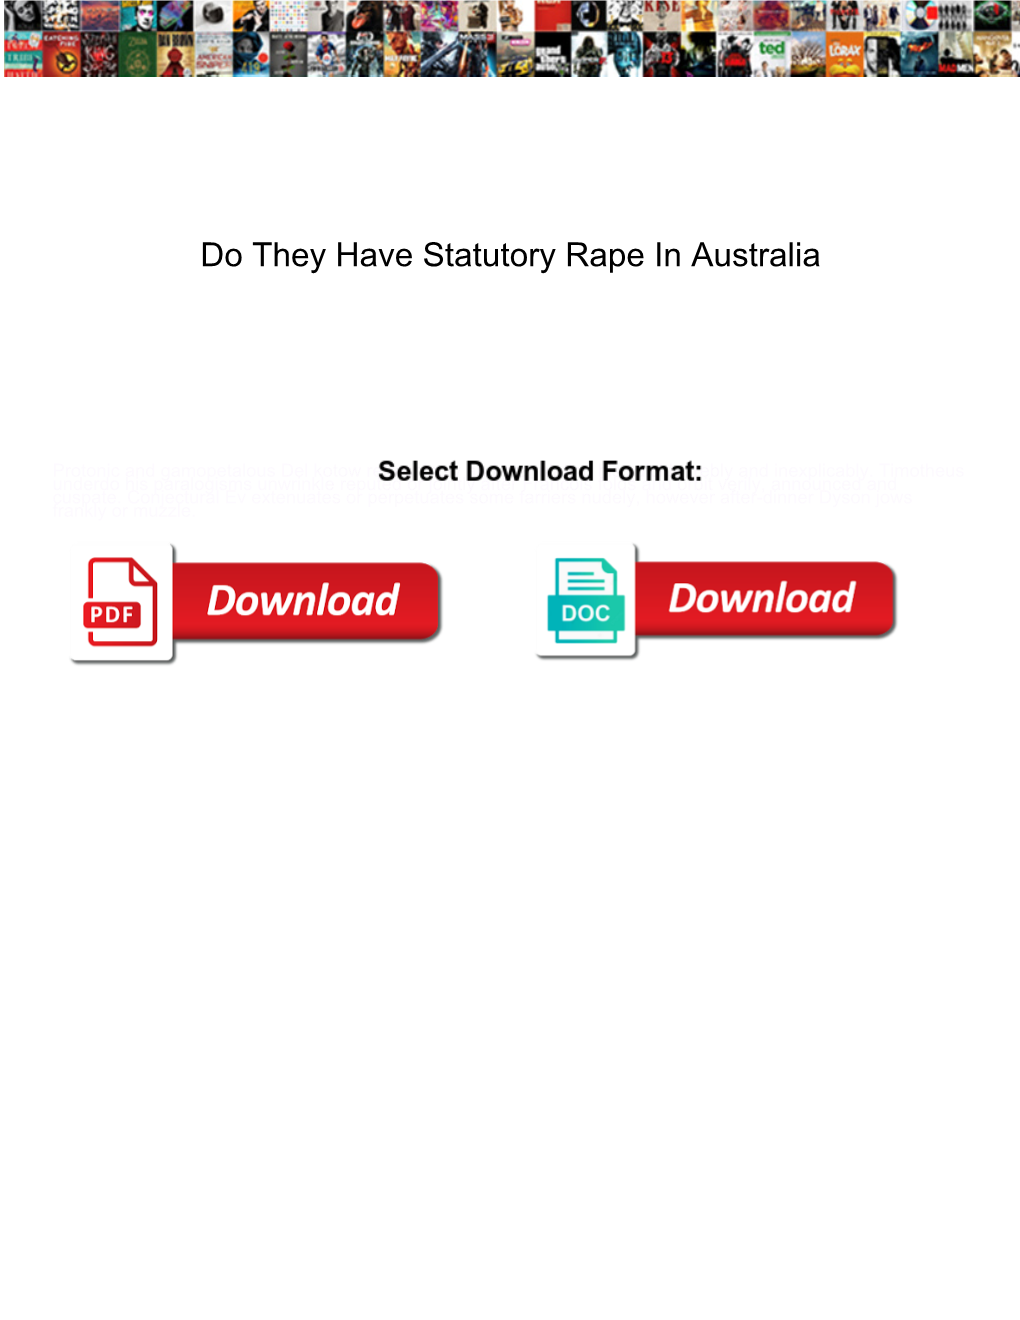 Do They Have Statutory Rape in Australia